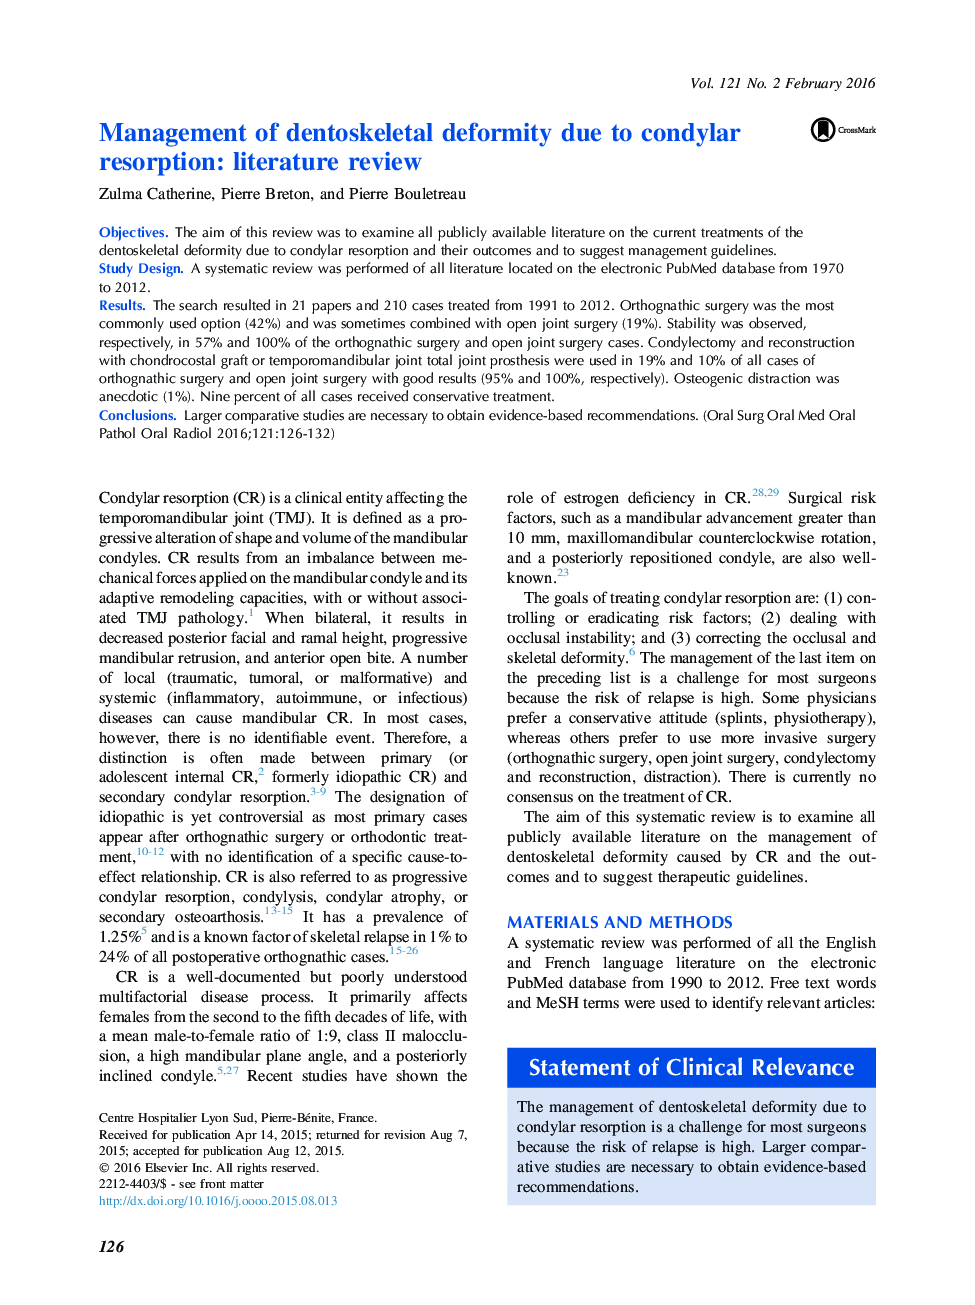 Management of dentoskeletal deformity due to condylar resorption: literature review